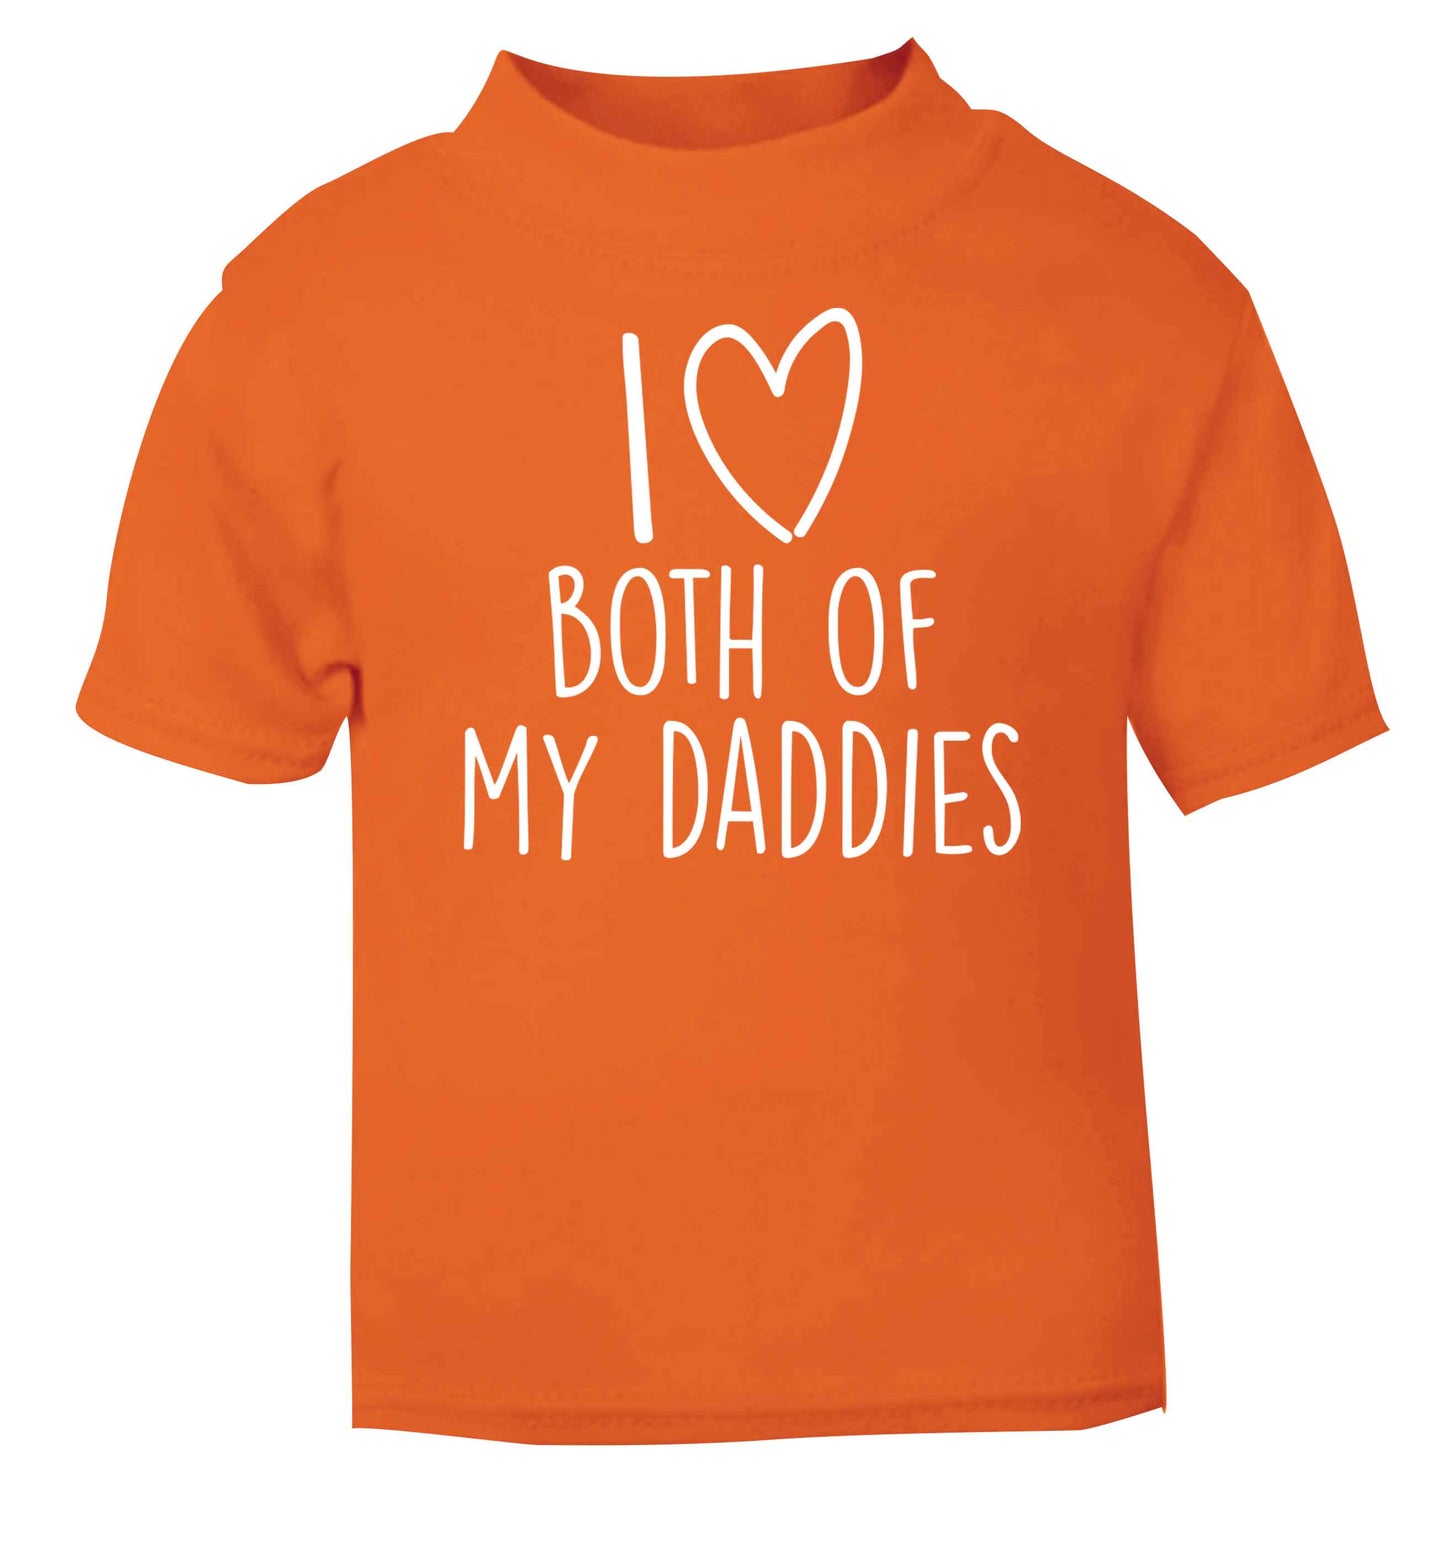 I love both of my daddies orange baby toddler Tshirt 2 Years